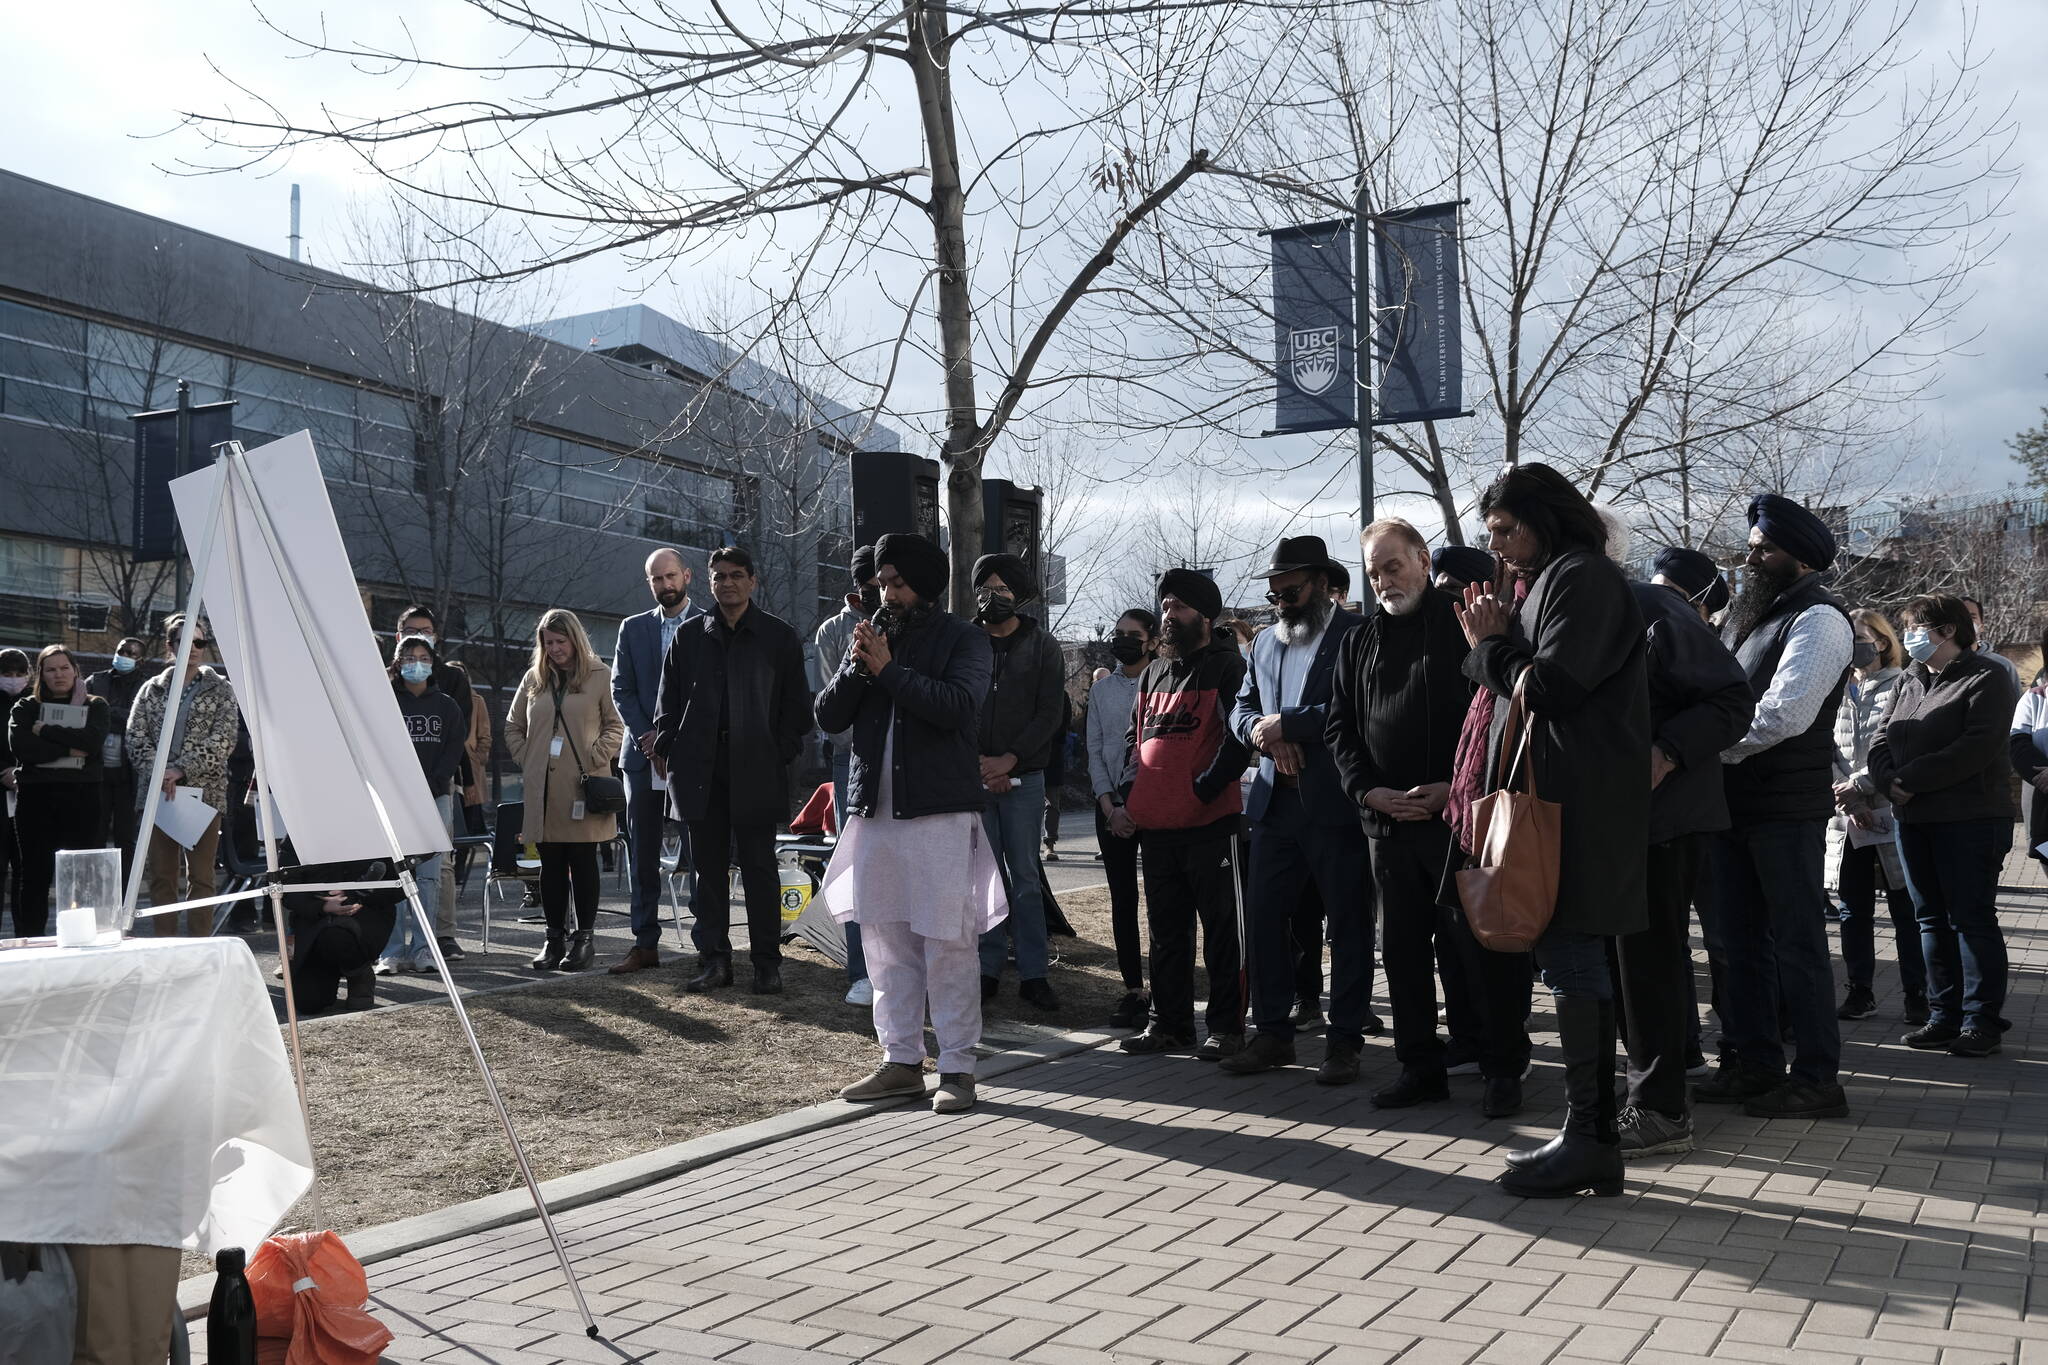 A Sikh man said a prayer for the vigil (Jacqueline Gelineau/Capital News)